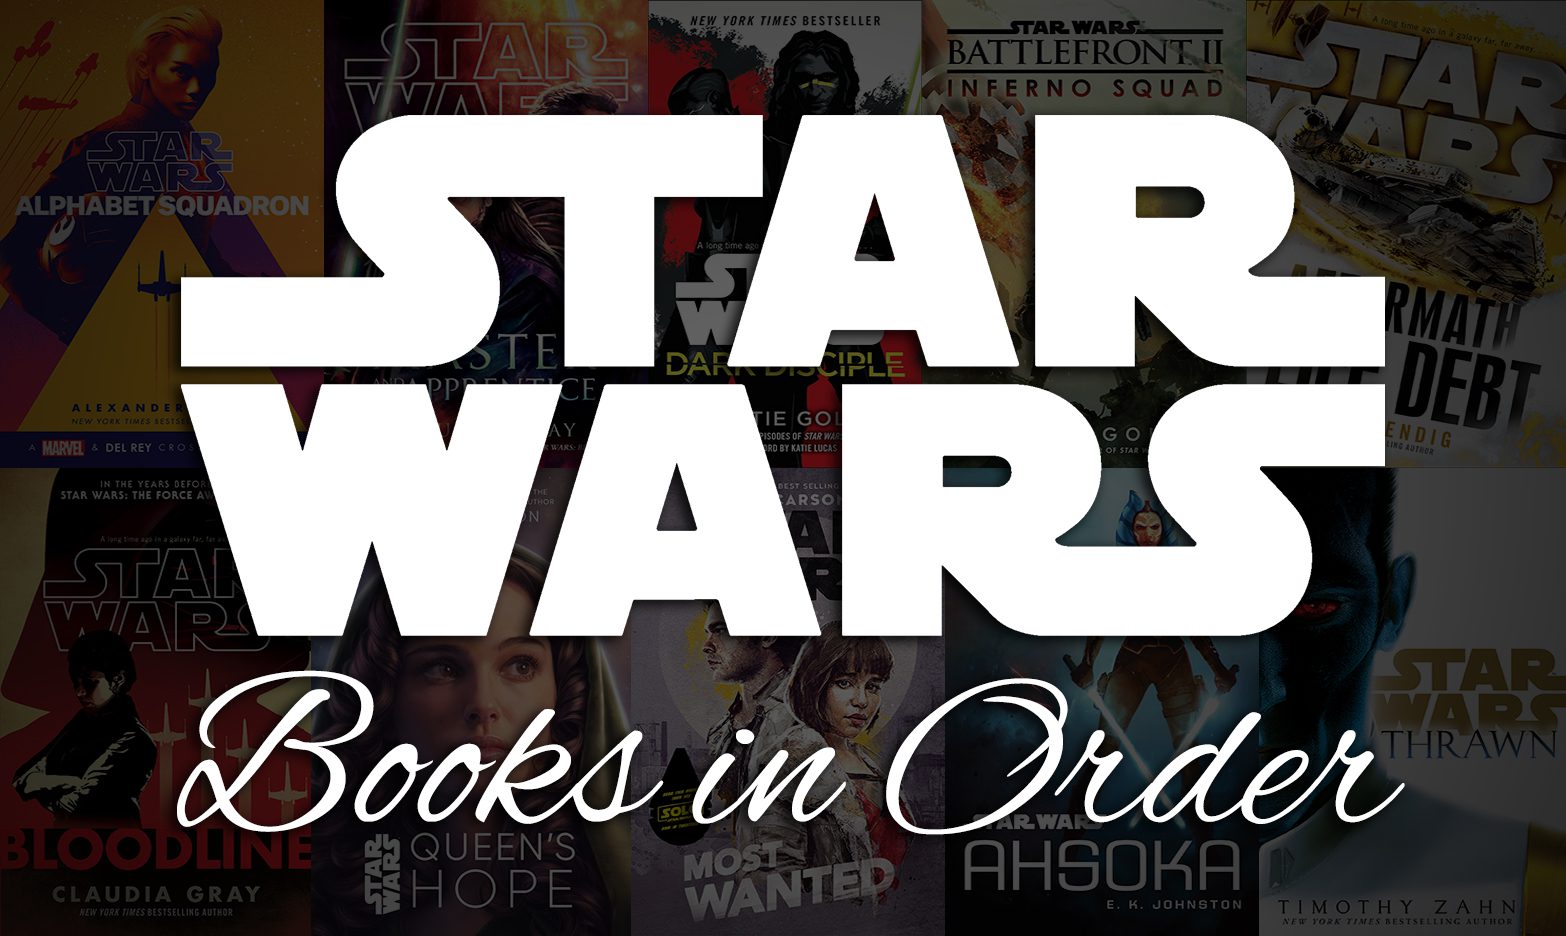 Star Wars Books in Order